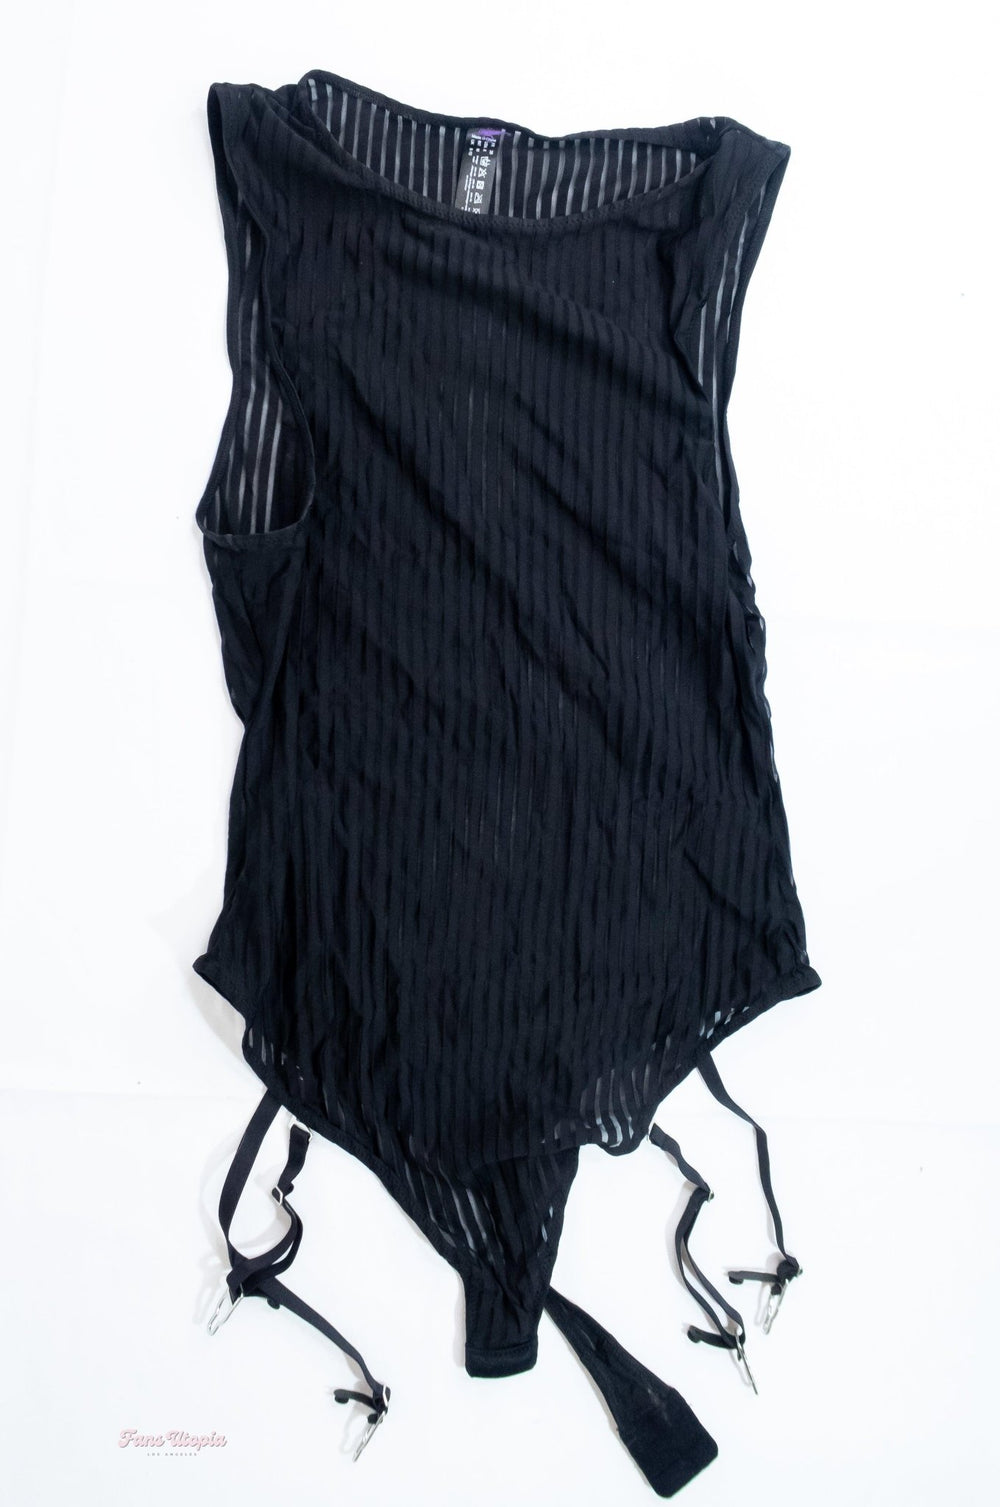 Victoria Voxxx Black Bodysuit with Leg Straps - FANS UTOPIA